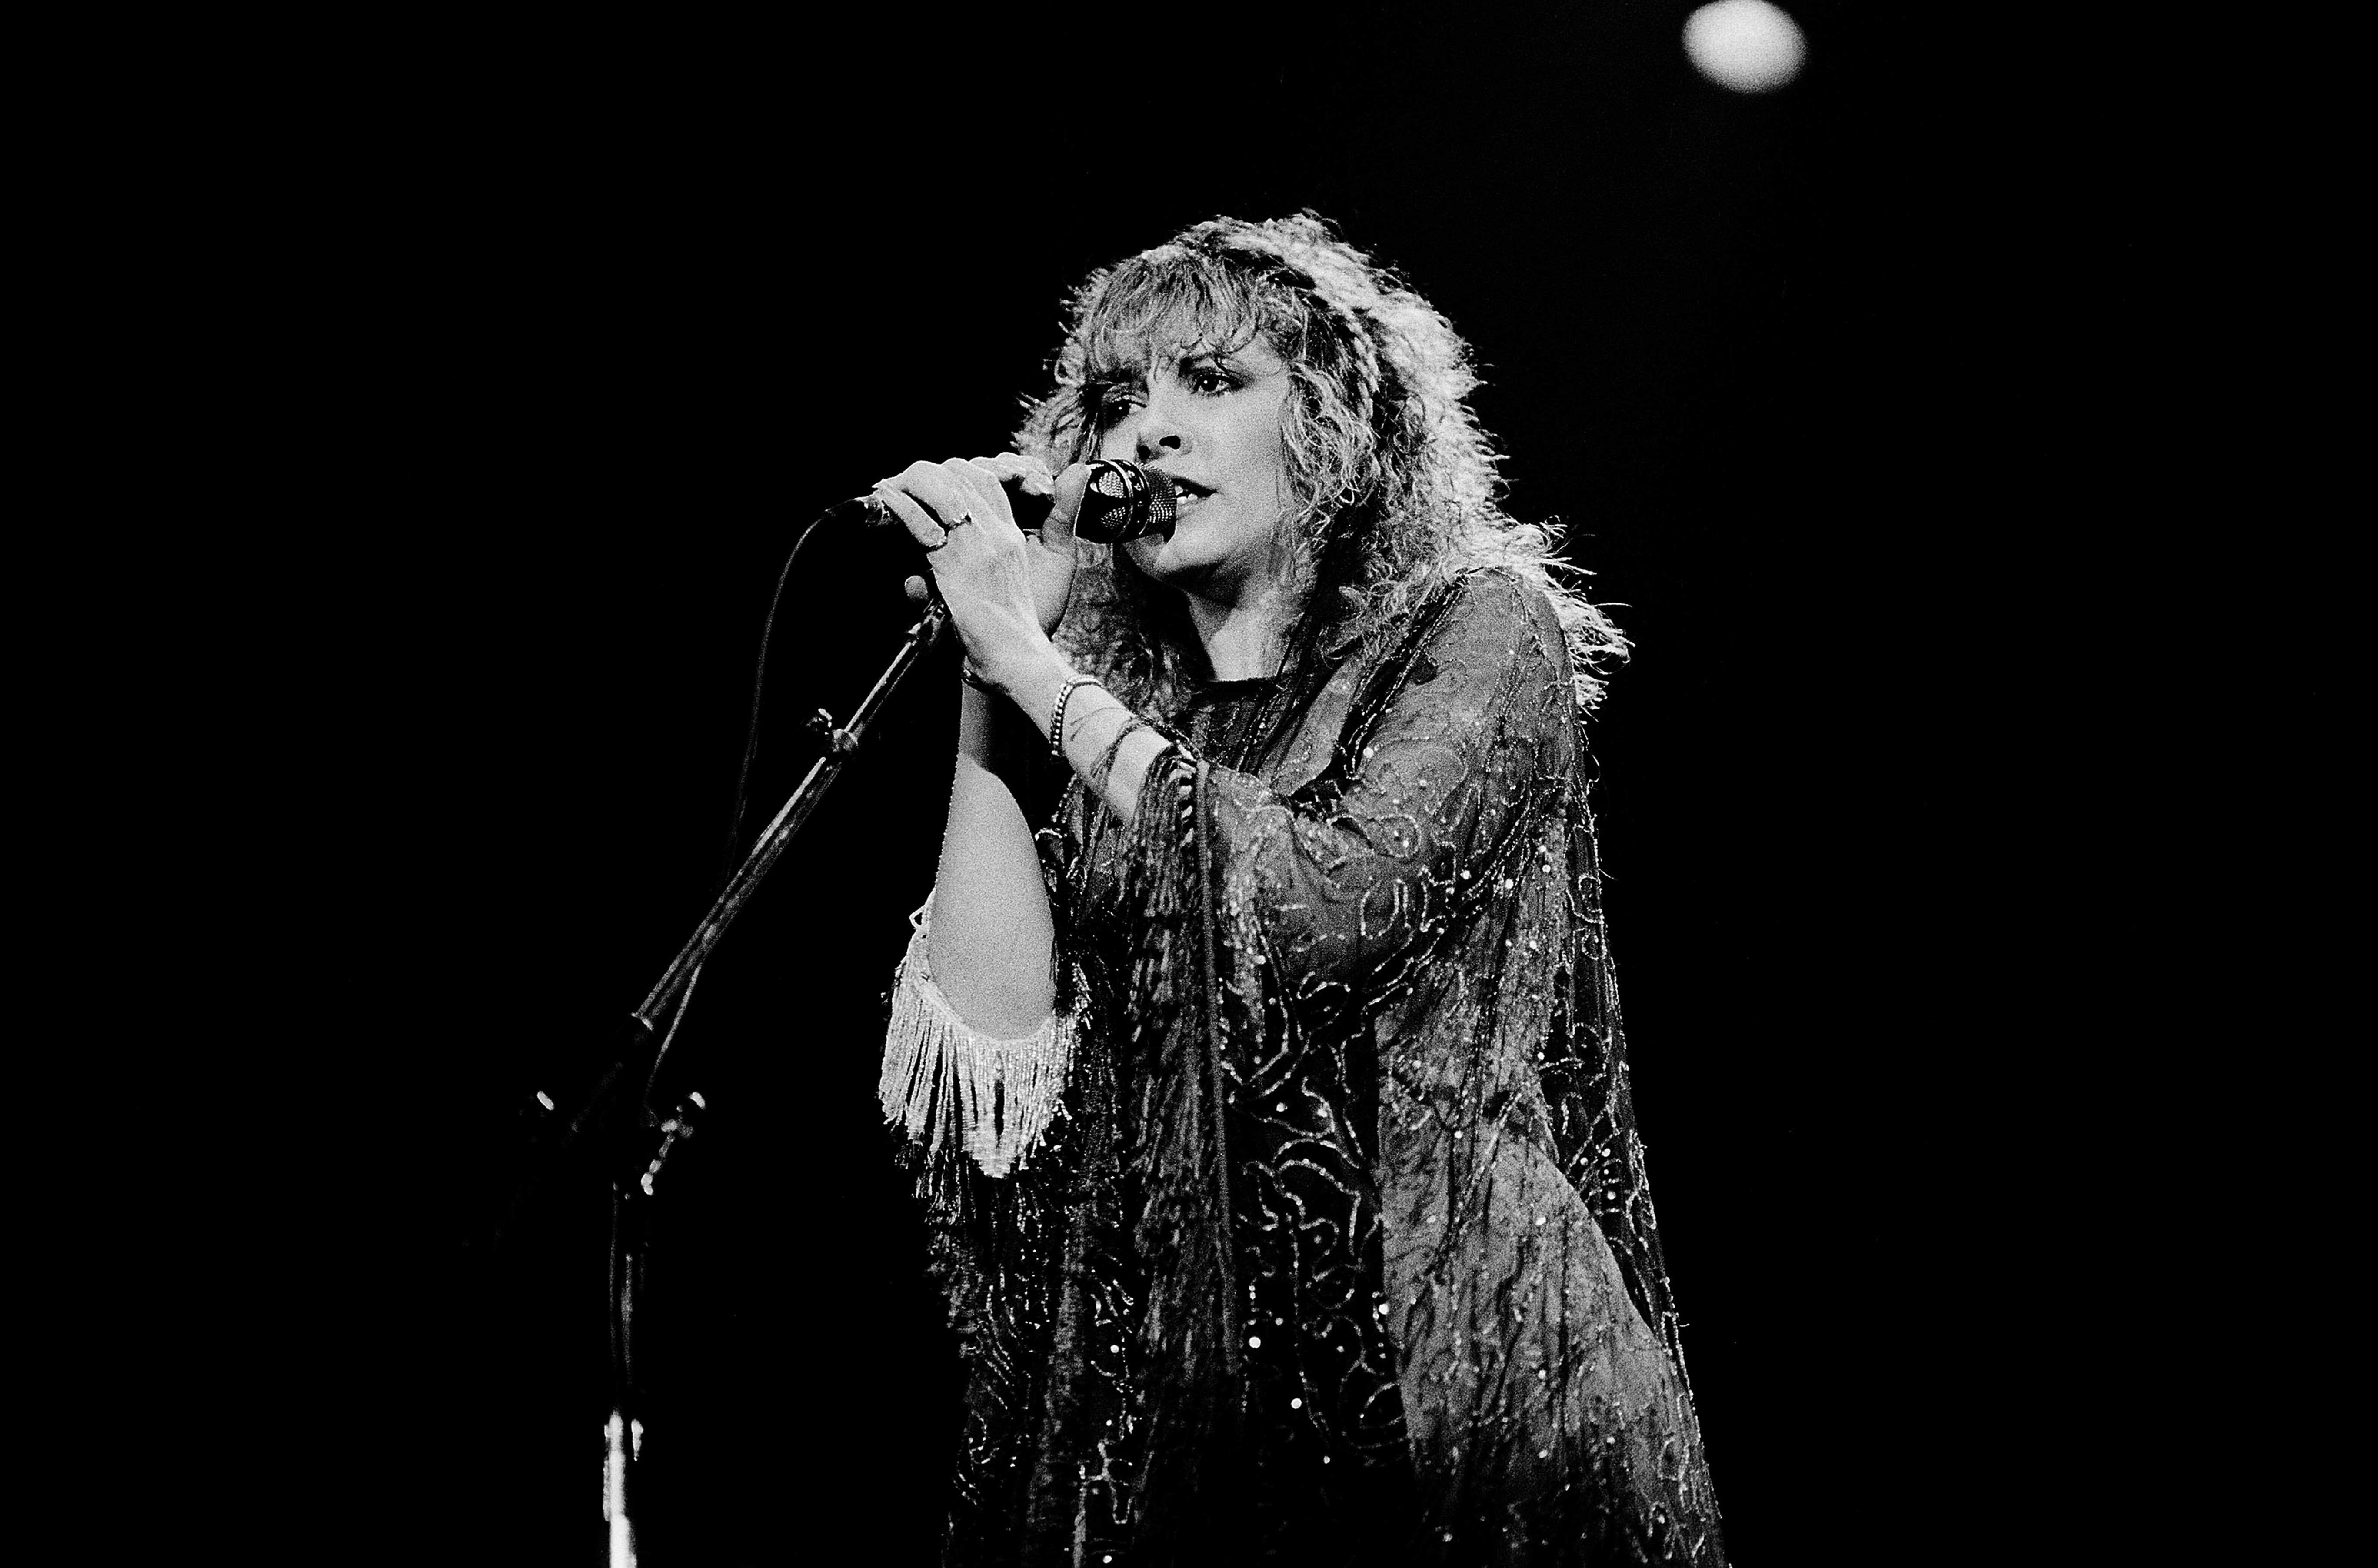 American musician Stevie Nicks performs onstage at the Rosemont Horizon, Rosemont, Illinois